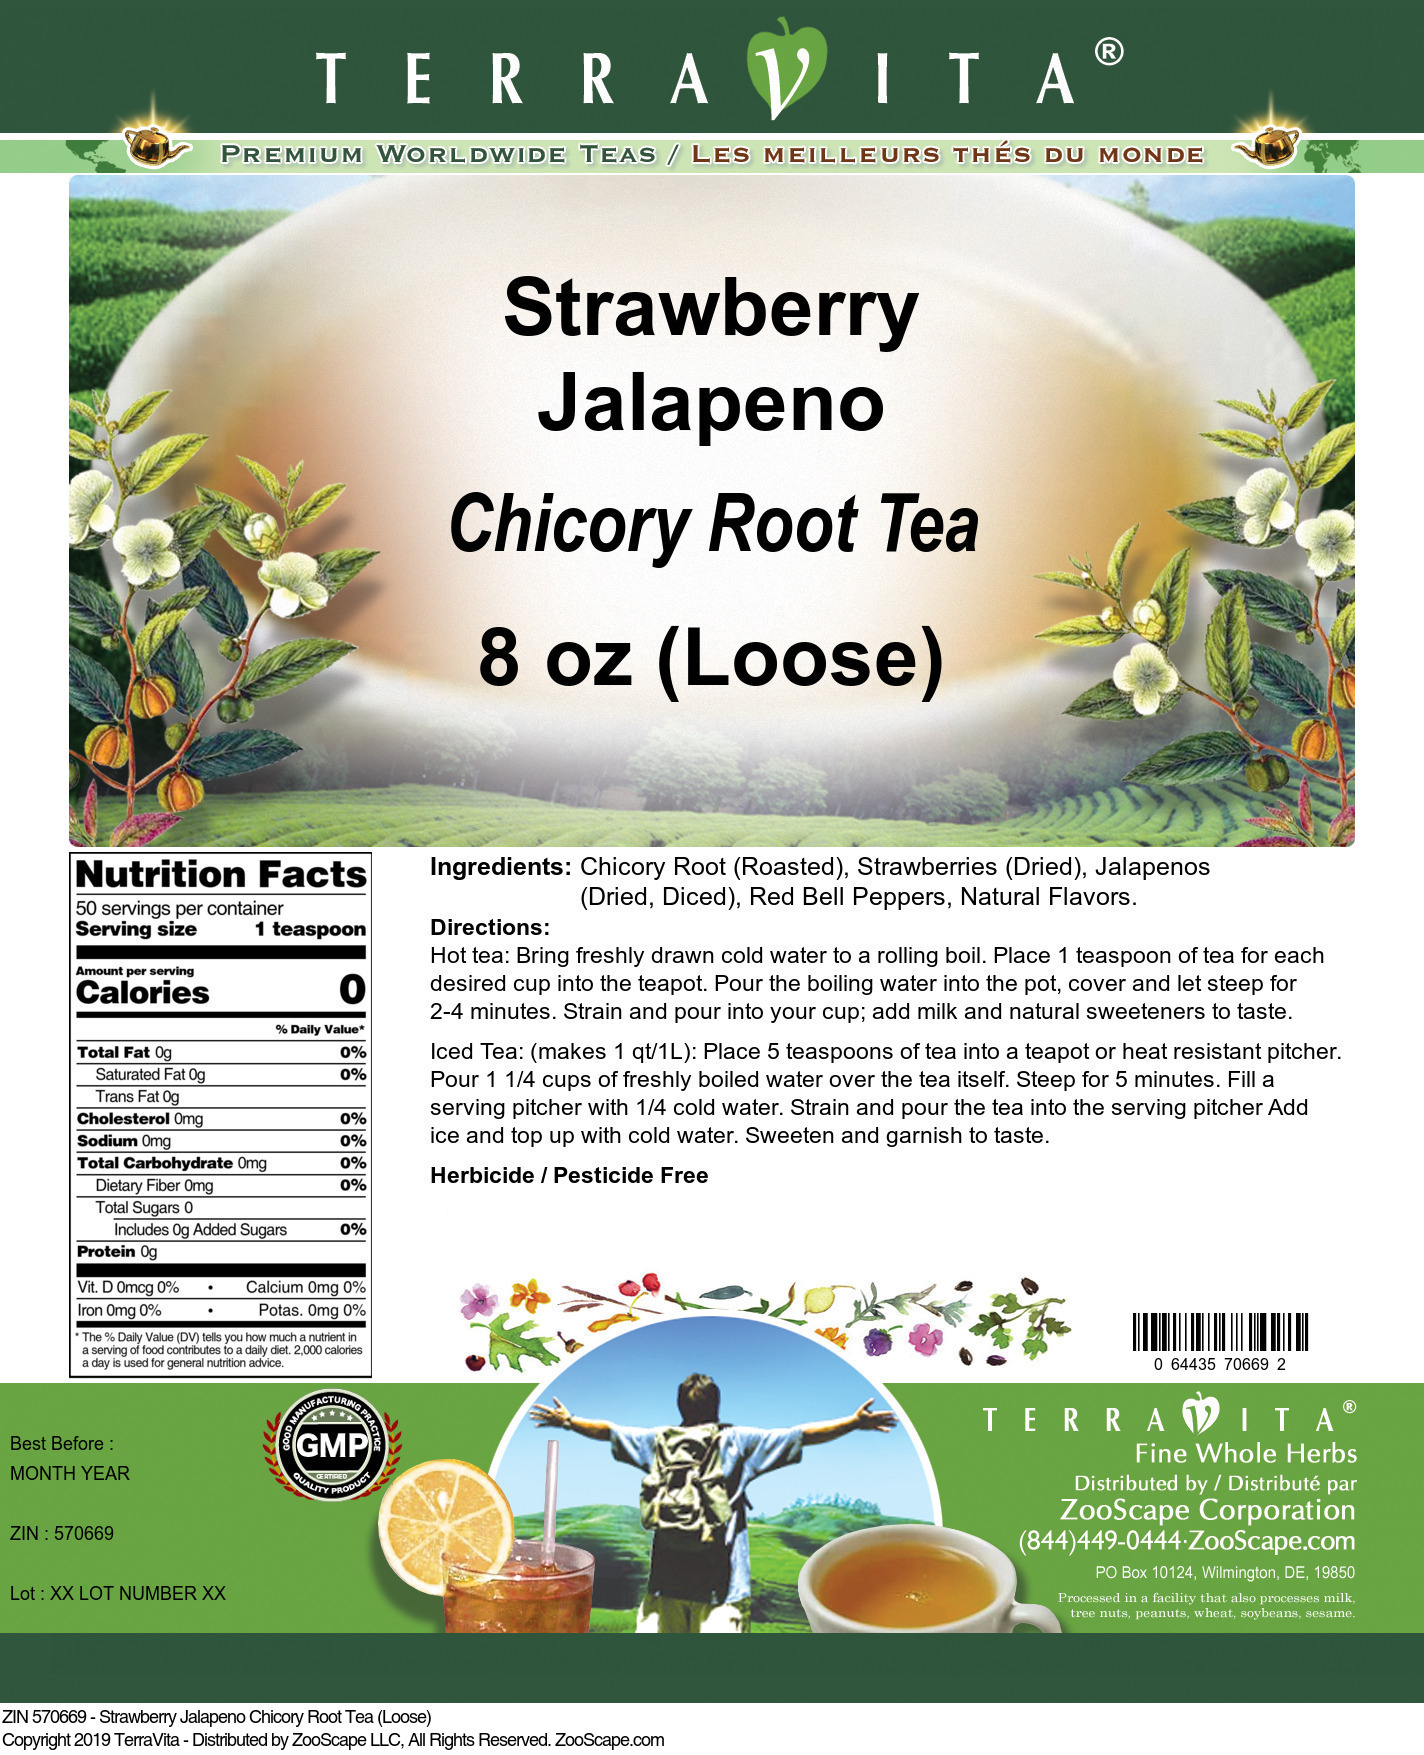 Strawberry Jalapeno Chicory Root Tea (Loose) - Label